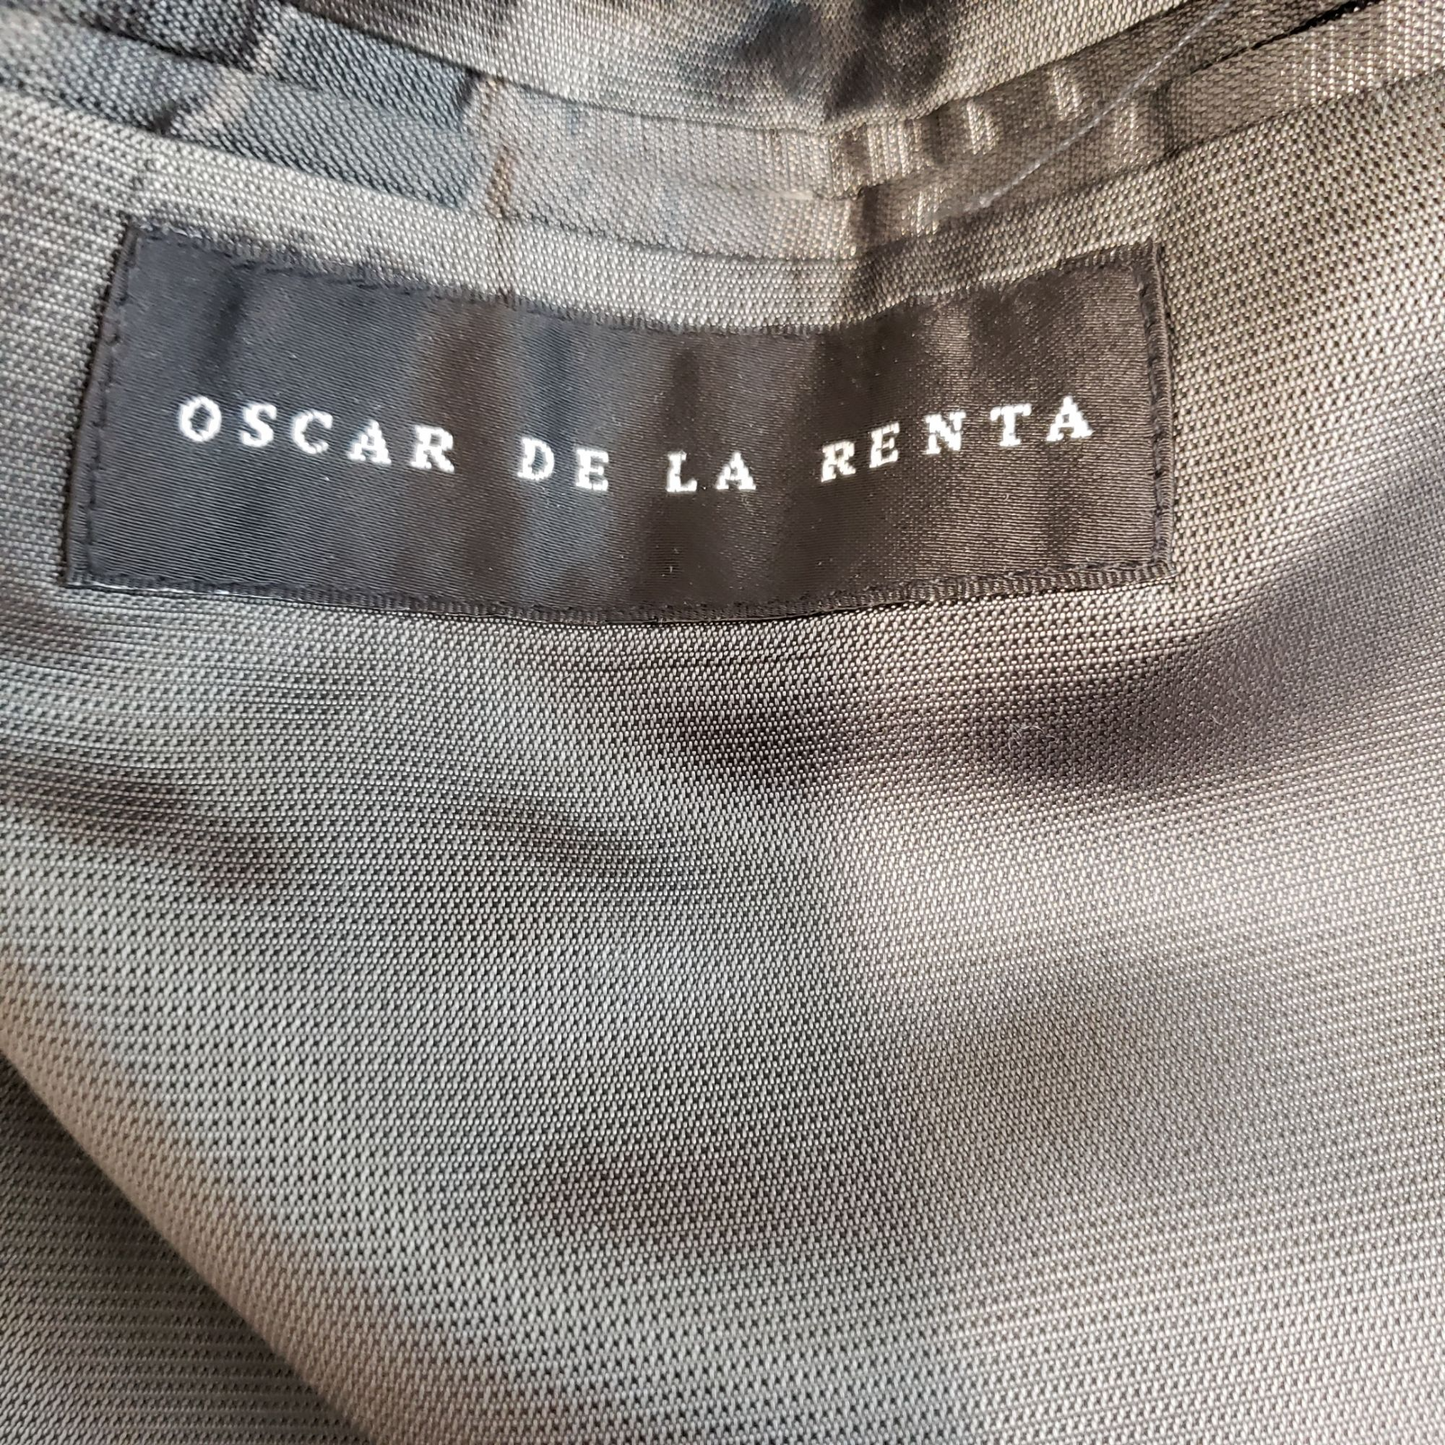 Oscar de la Renta Wool Checked Sport Suit Jacket Size 42L